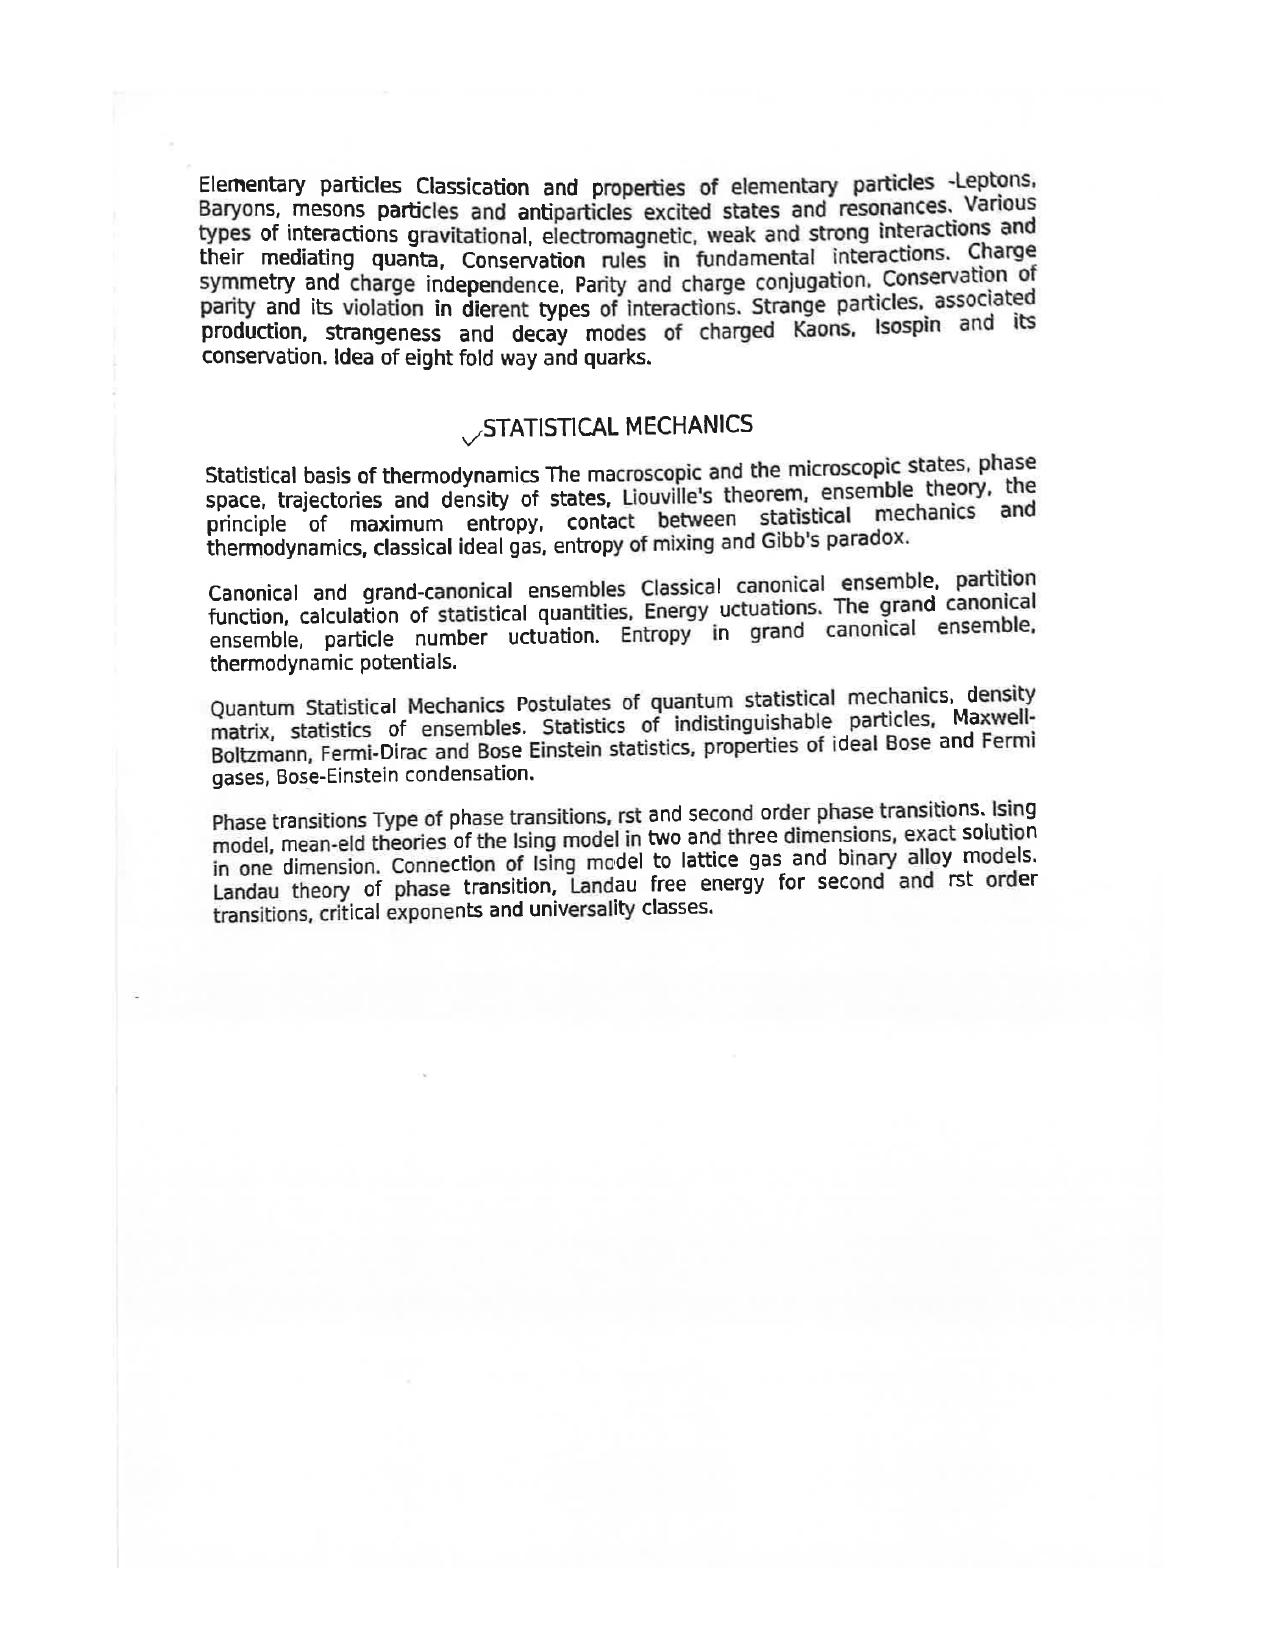 JMI Entrance Exam FACULTY OF NATURAL SCIENCES Syllabus - Page 28